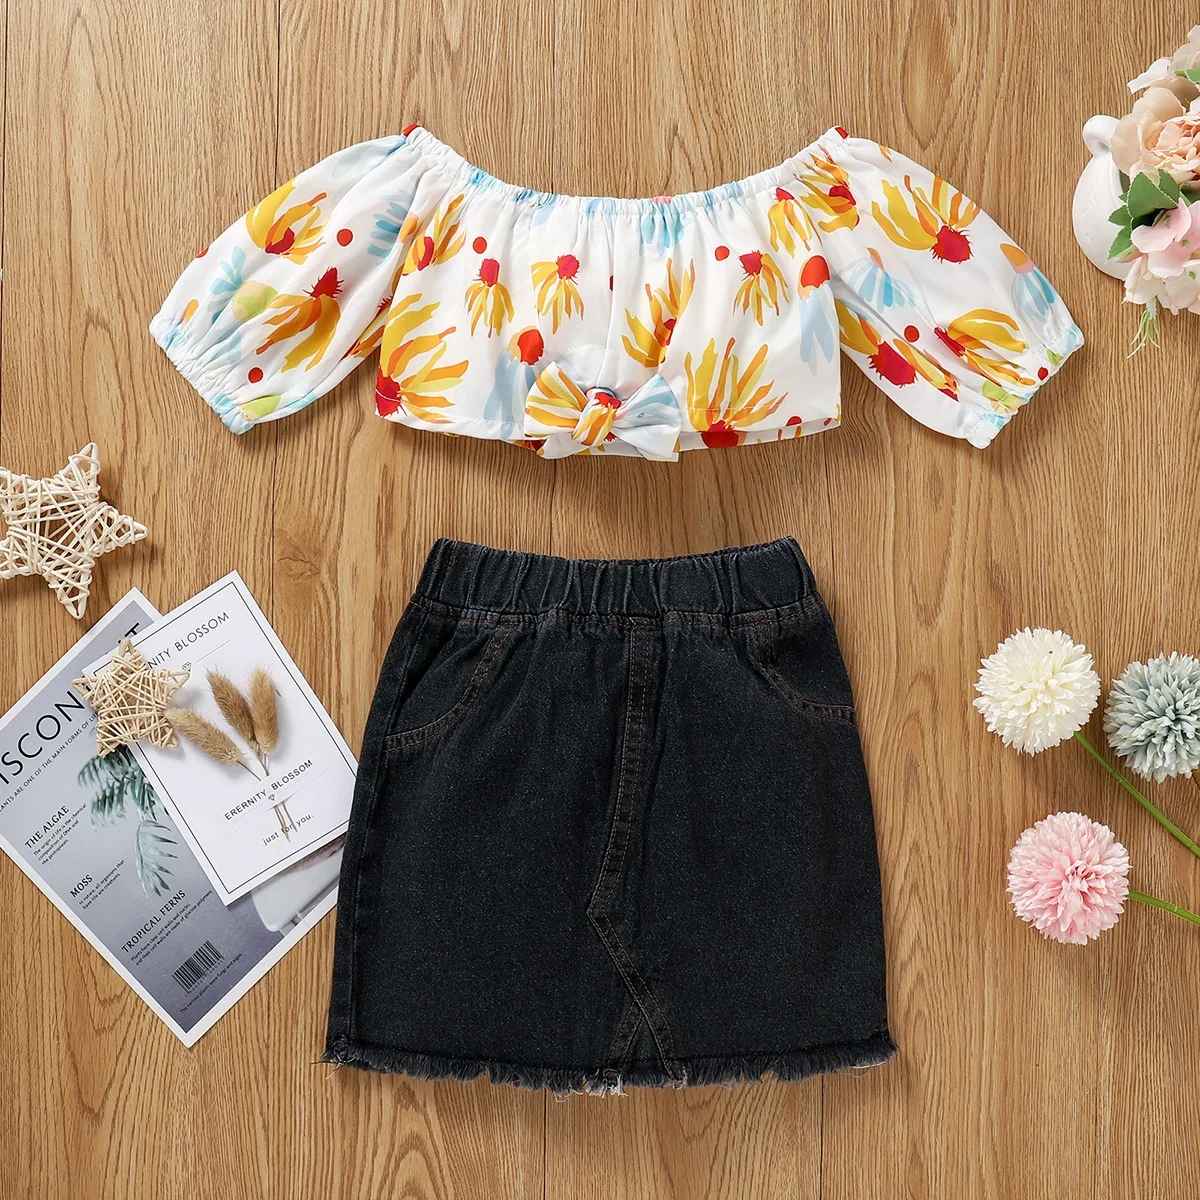 UK Toddler Kid Girl Summer Clothes Solid Tops Floral Dress Skirt 2PCS Outfit Set 